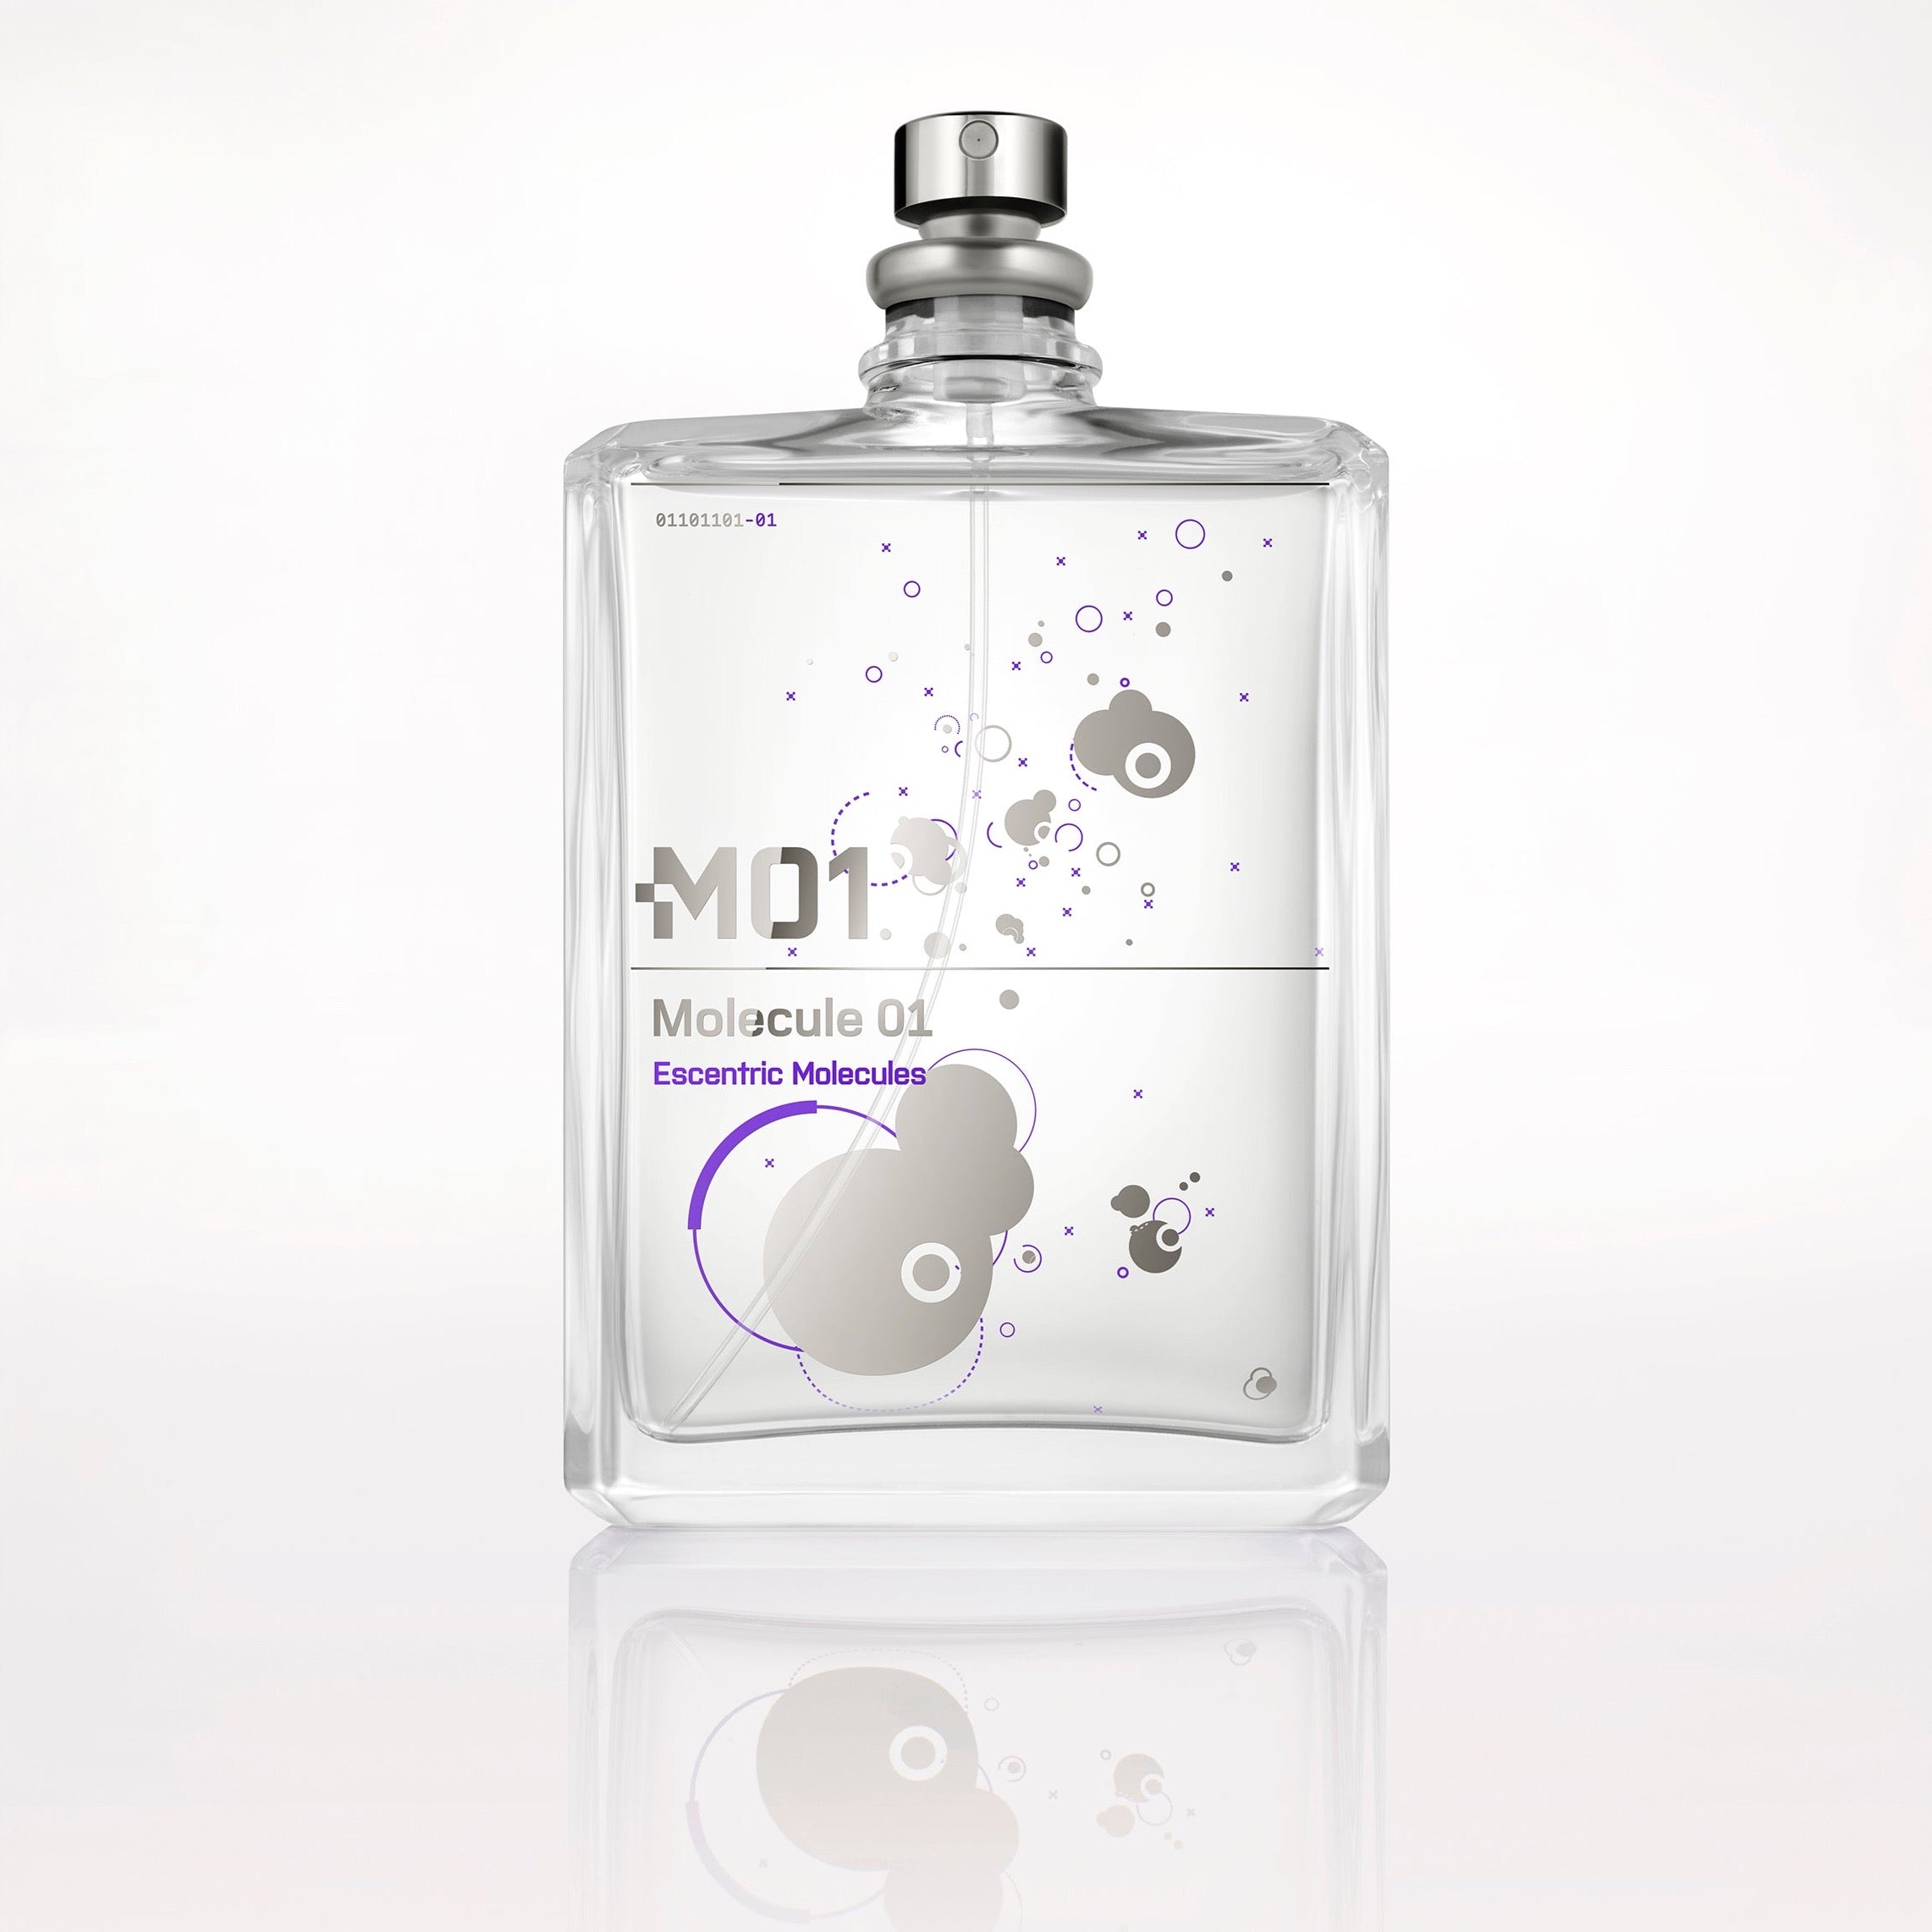 Escentric Molecules Perfume Collection - Luxury, Unisex Scents 